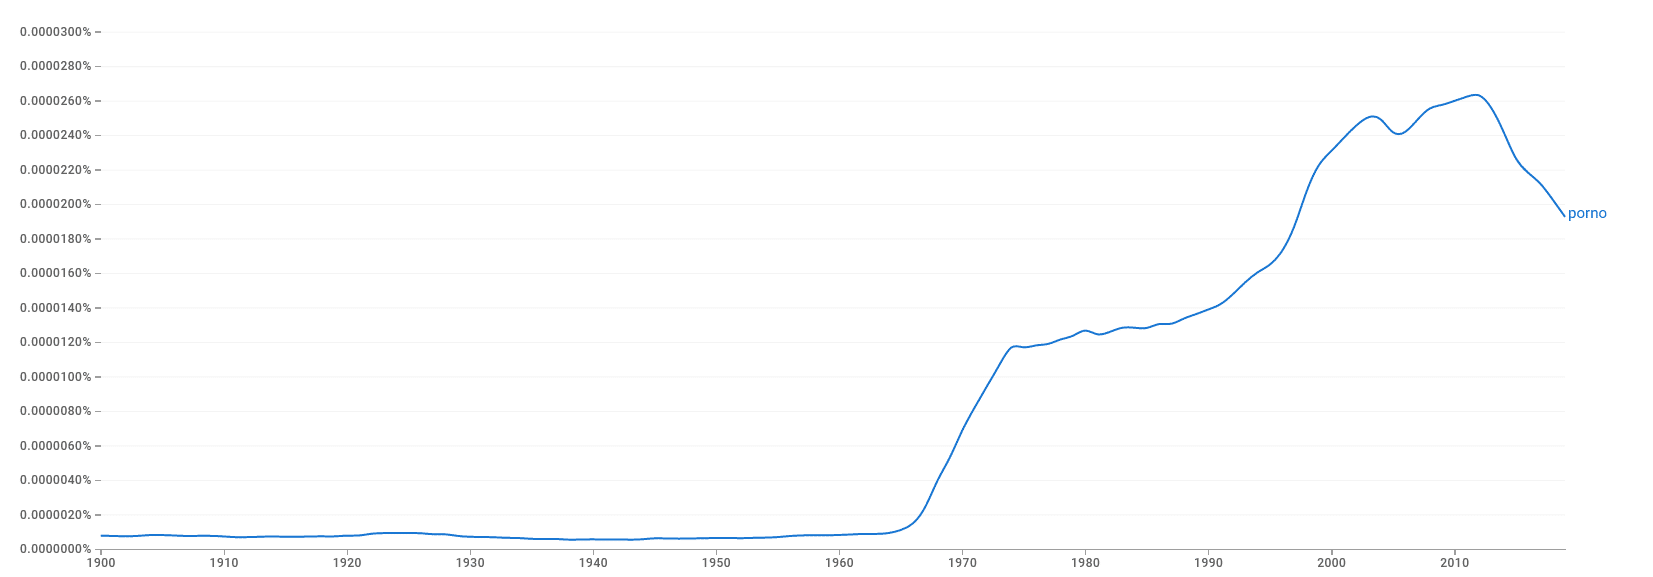 porno statistics trending downard in recent years